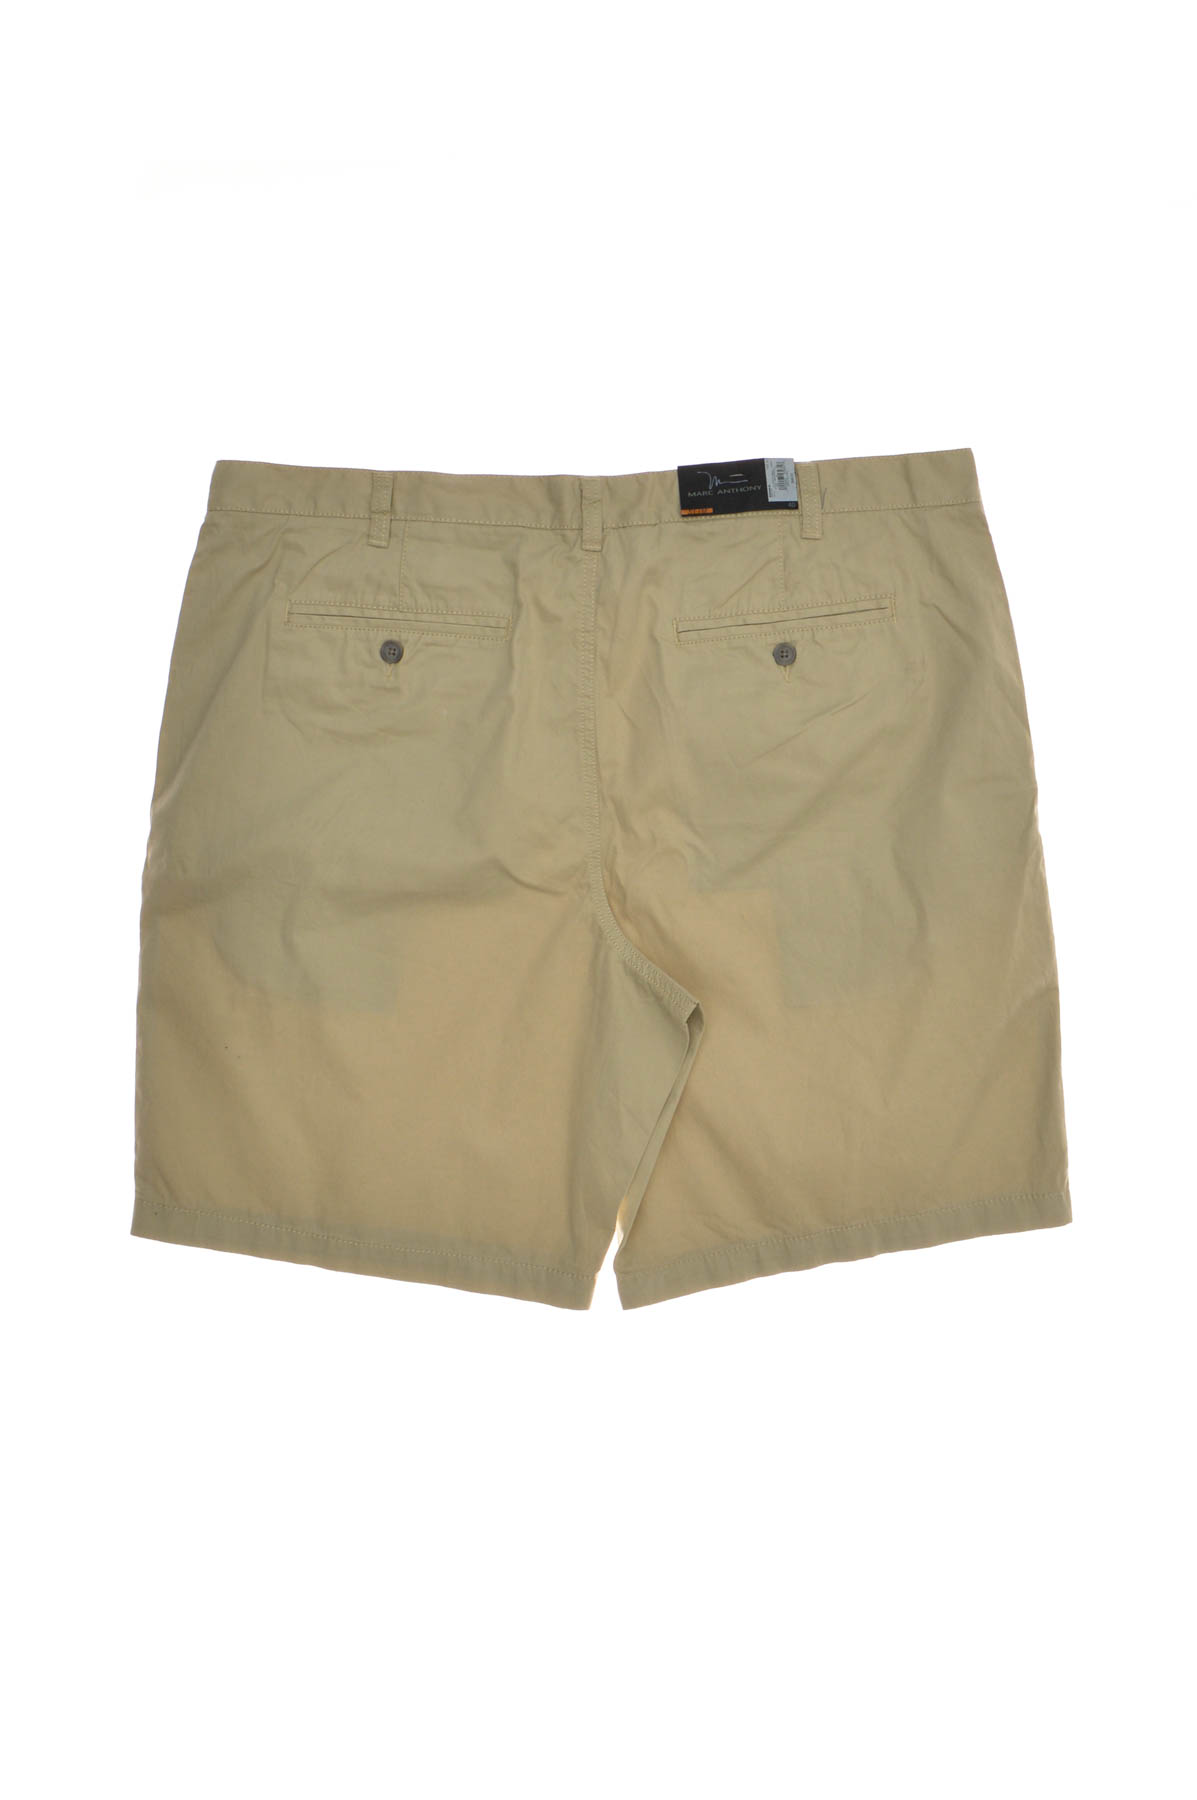 Men's shorts - MARC ANTHONY - 1